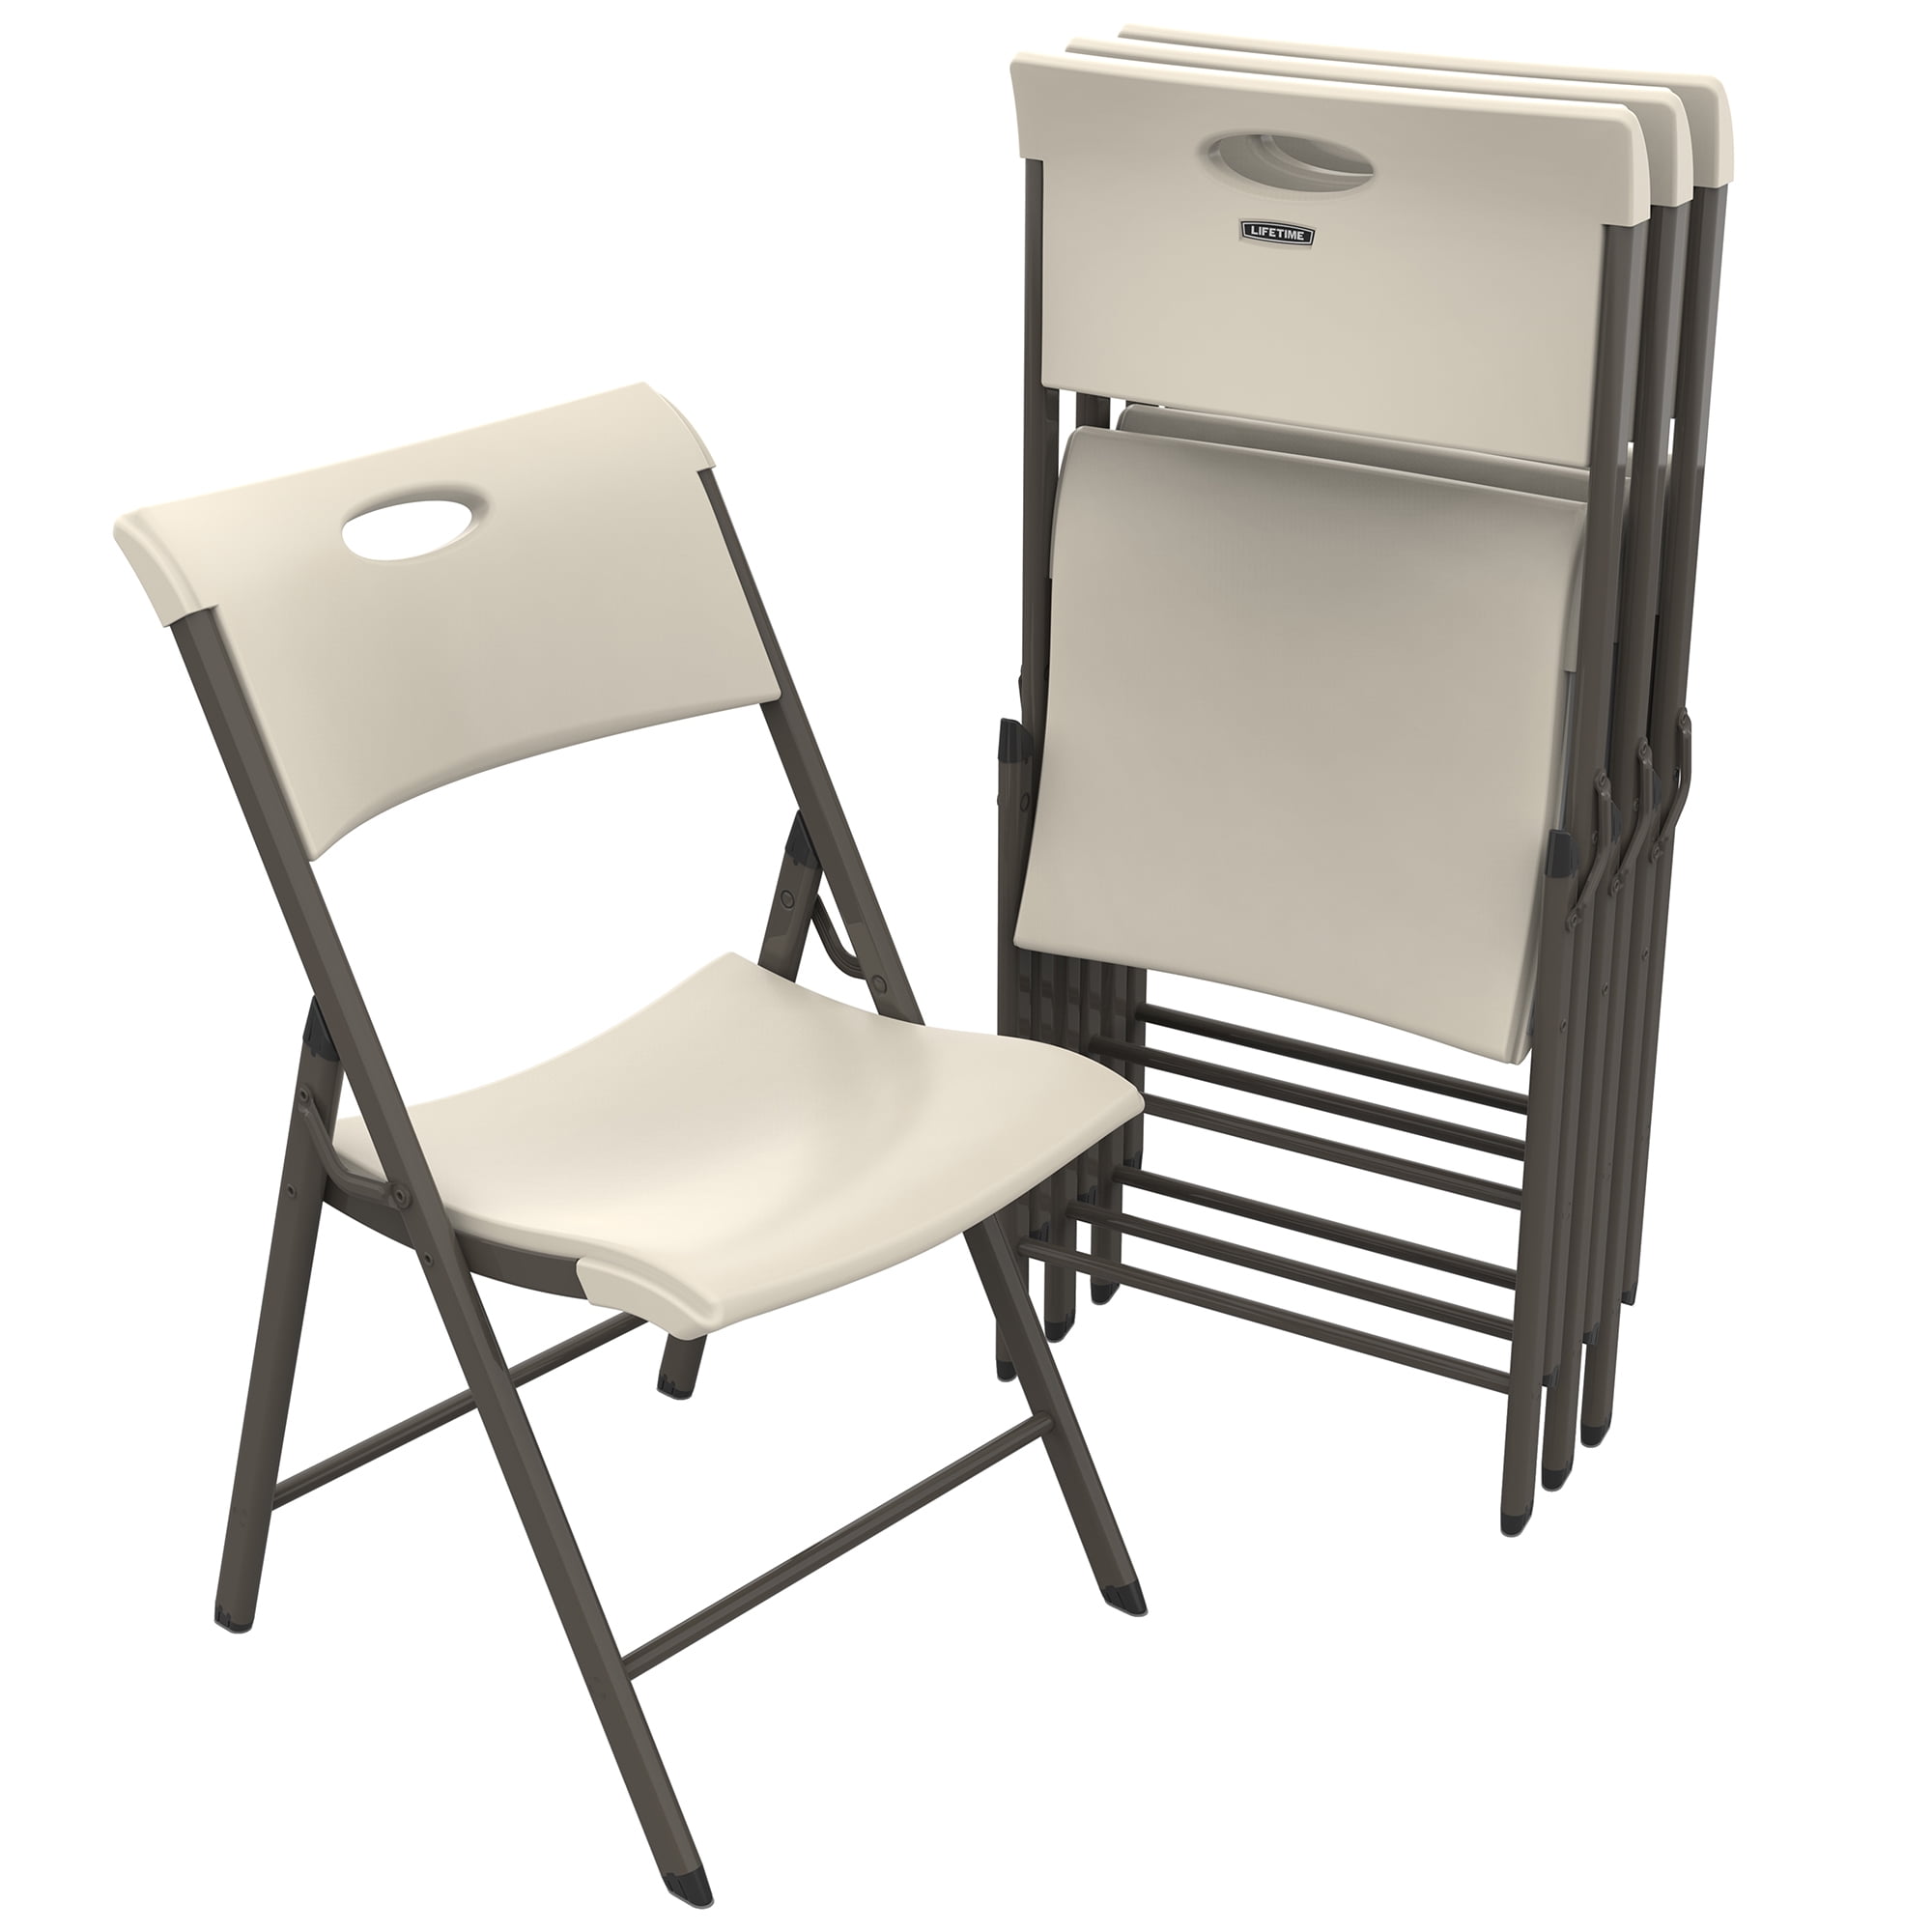 White Almond Lifetime Commercial Grade Folding Chair 4-pack 